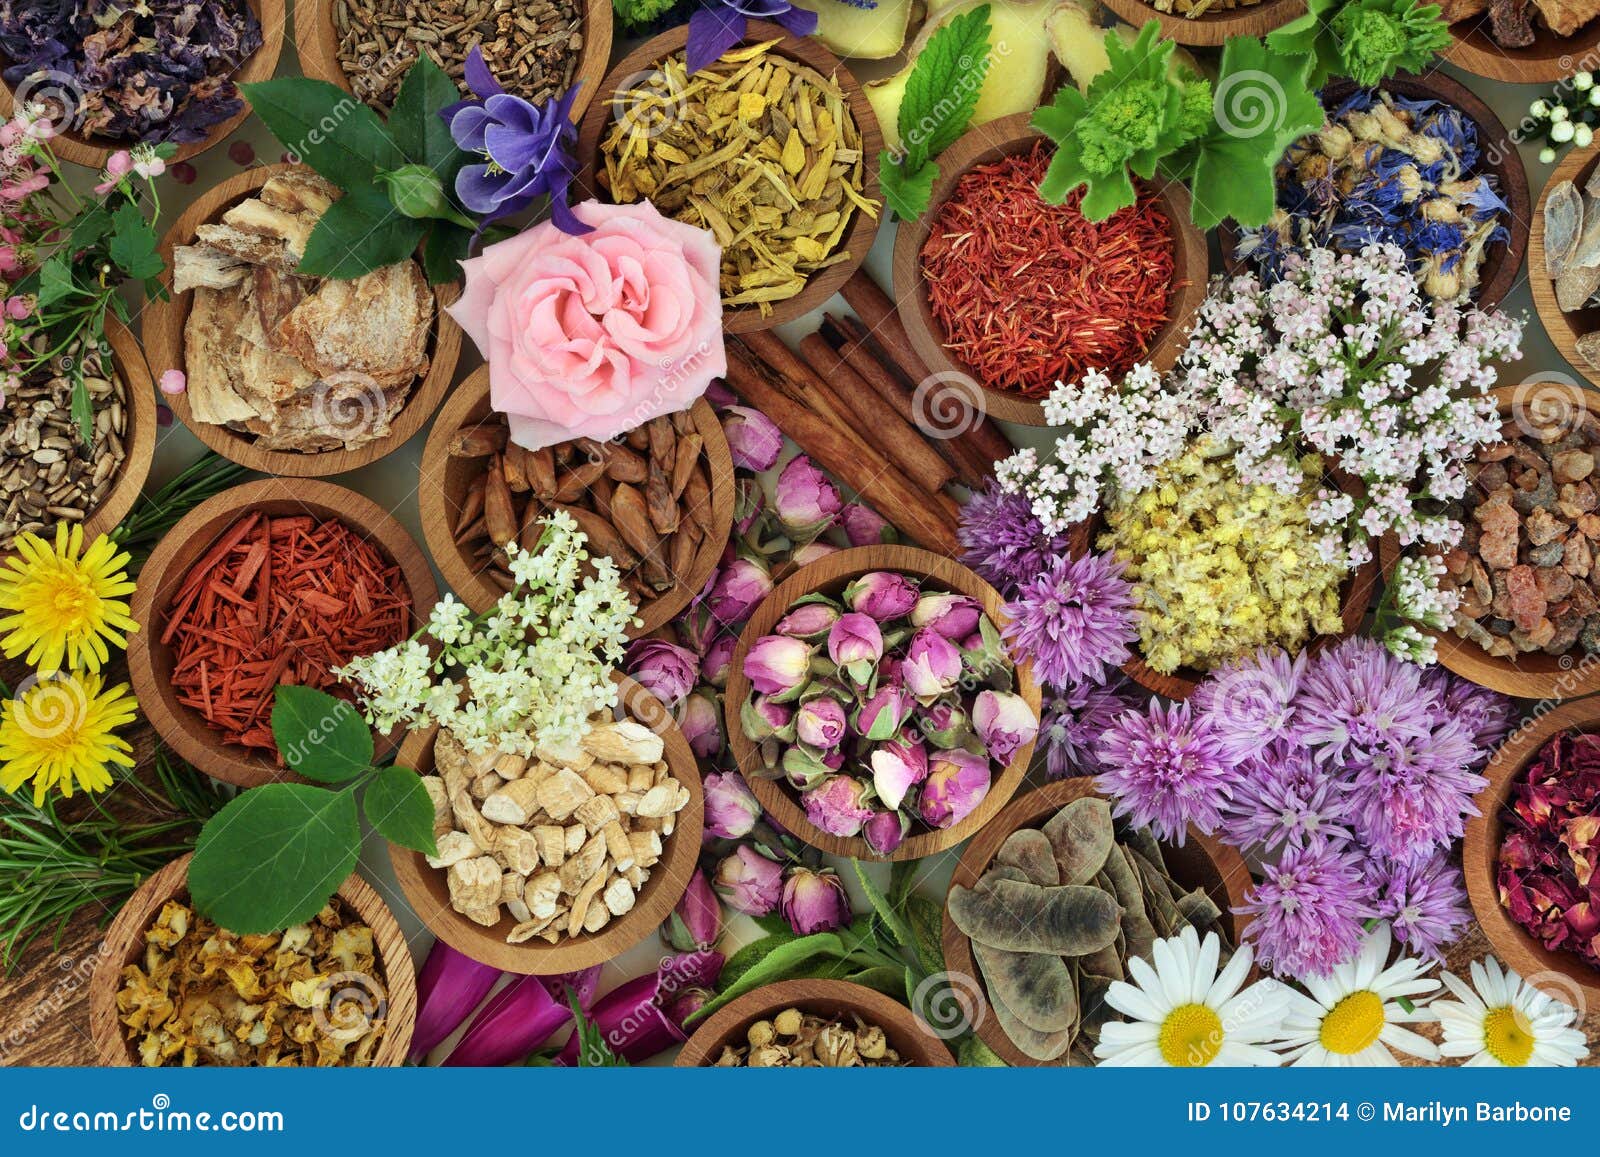 herbal medicine background